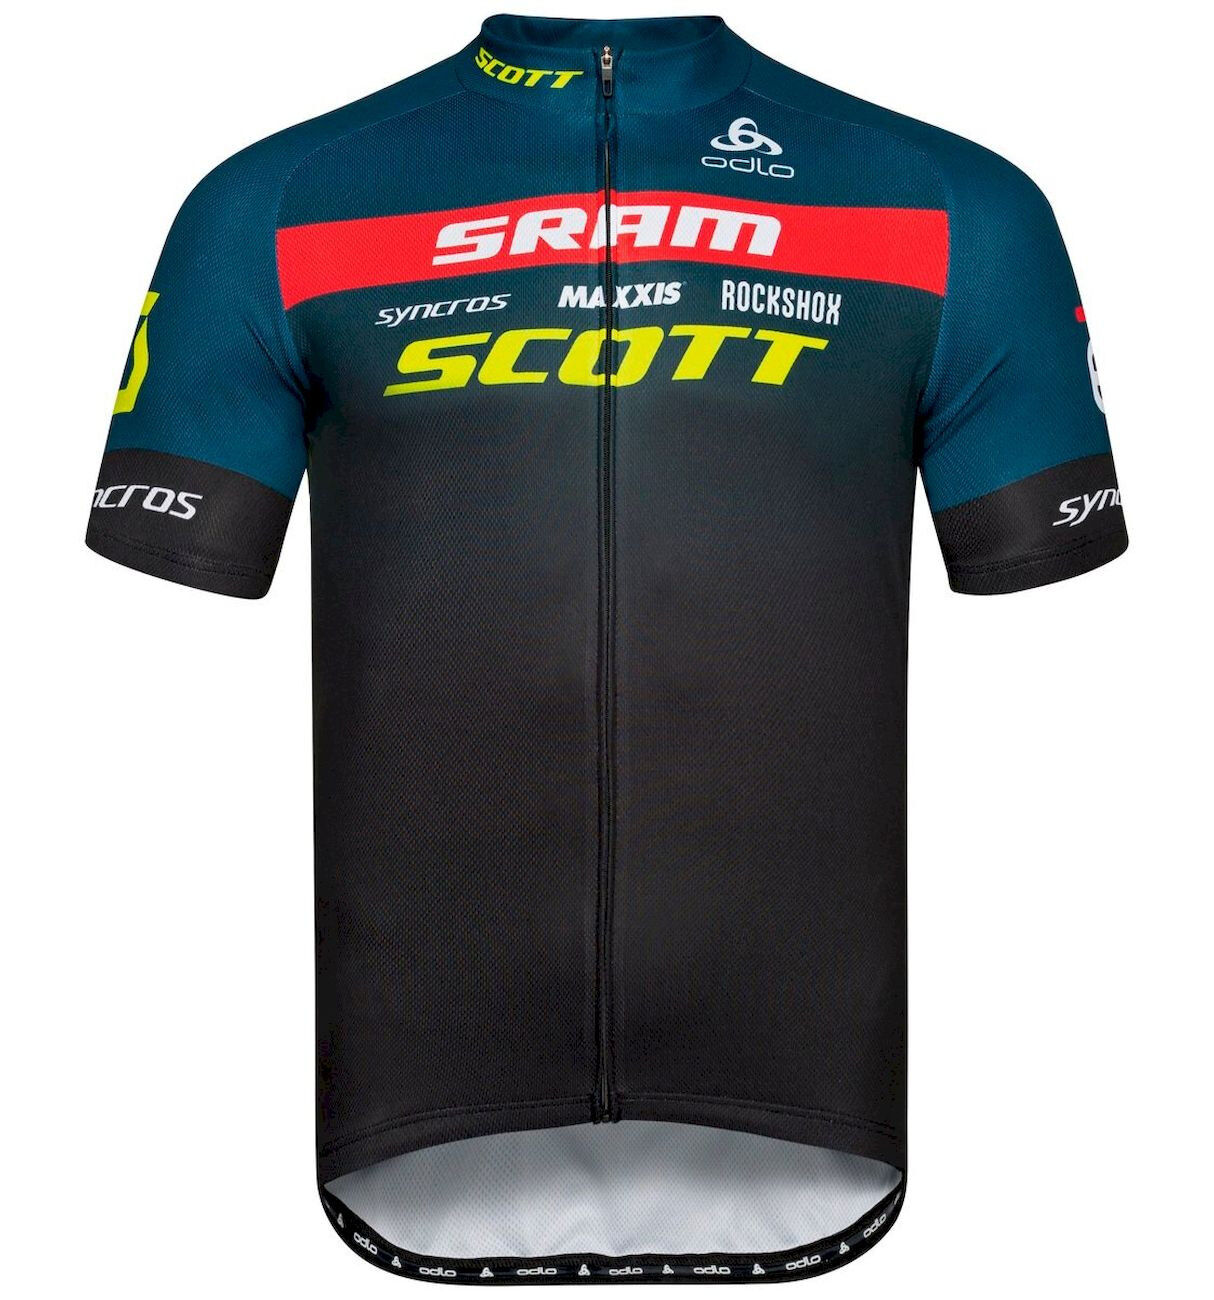 Odlo Scott Sr - Cycling jersey - Men's